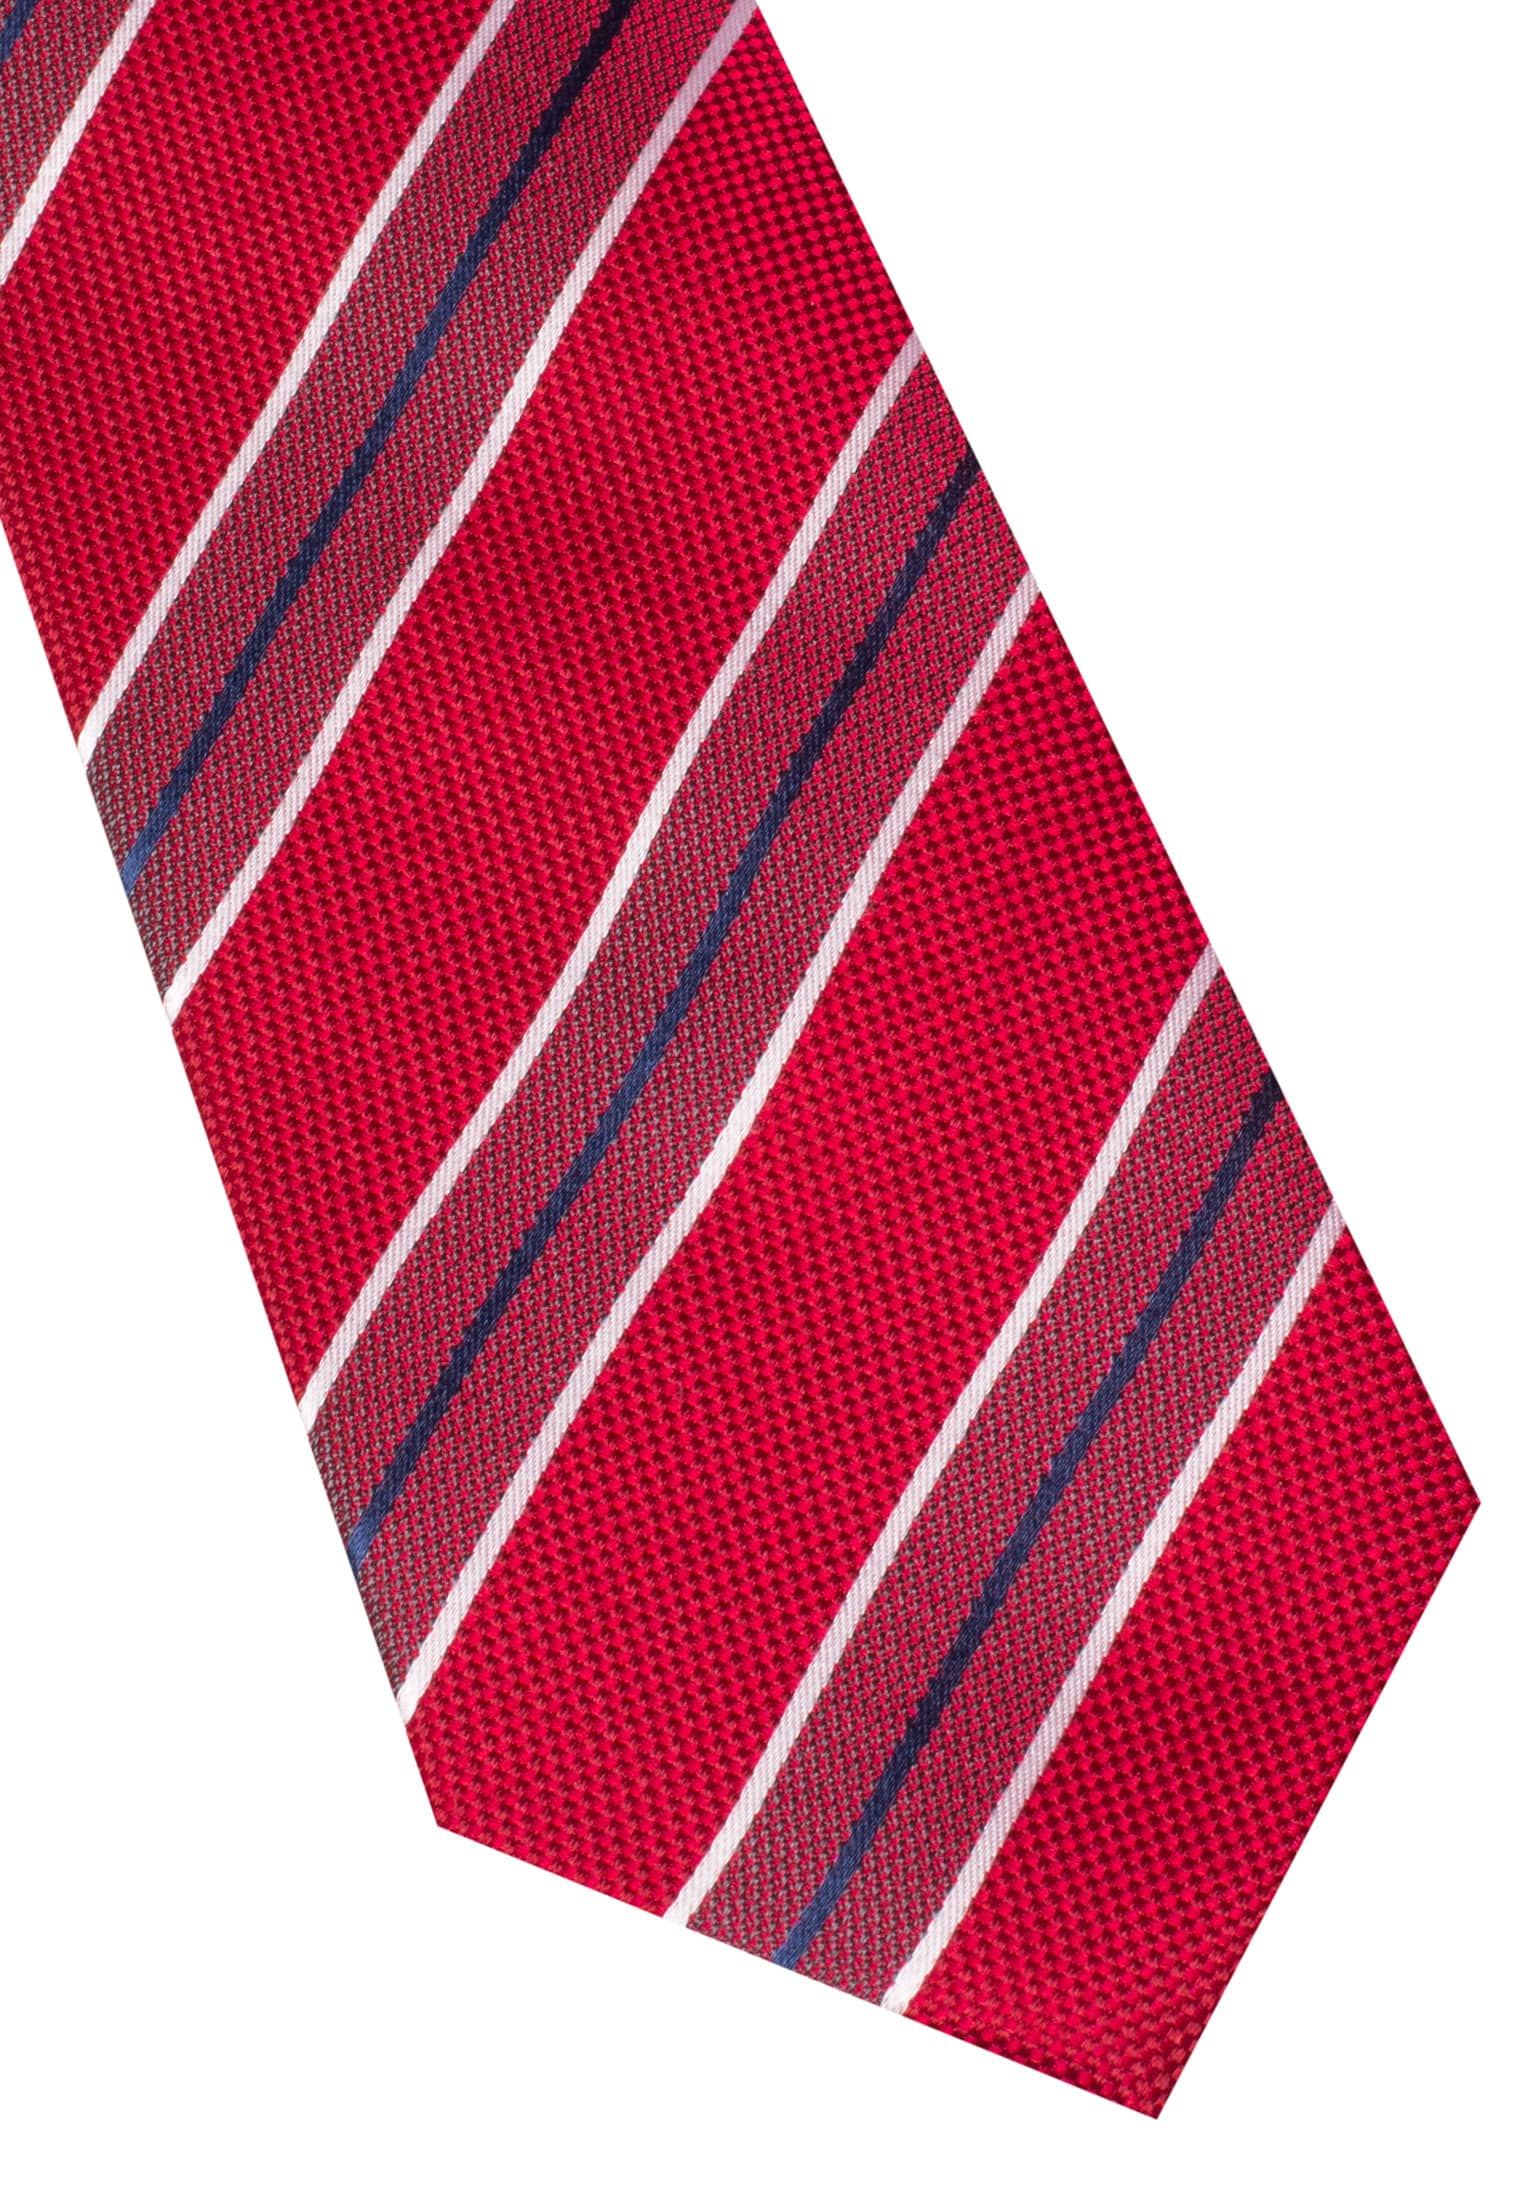 Outlet-Aufmerksamkeit Krawatte in navy/rot gestreift | | | 1AC00533-81-89-142 142 navy/rot